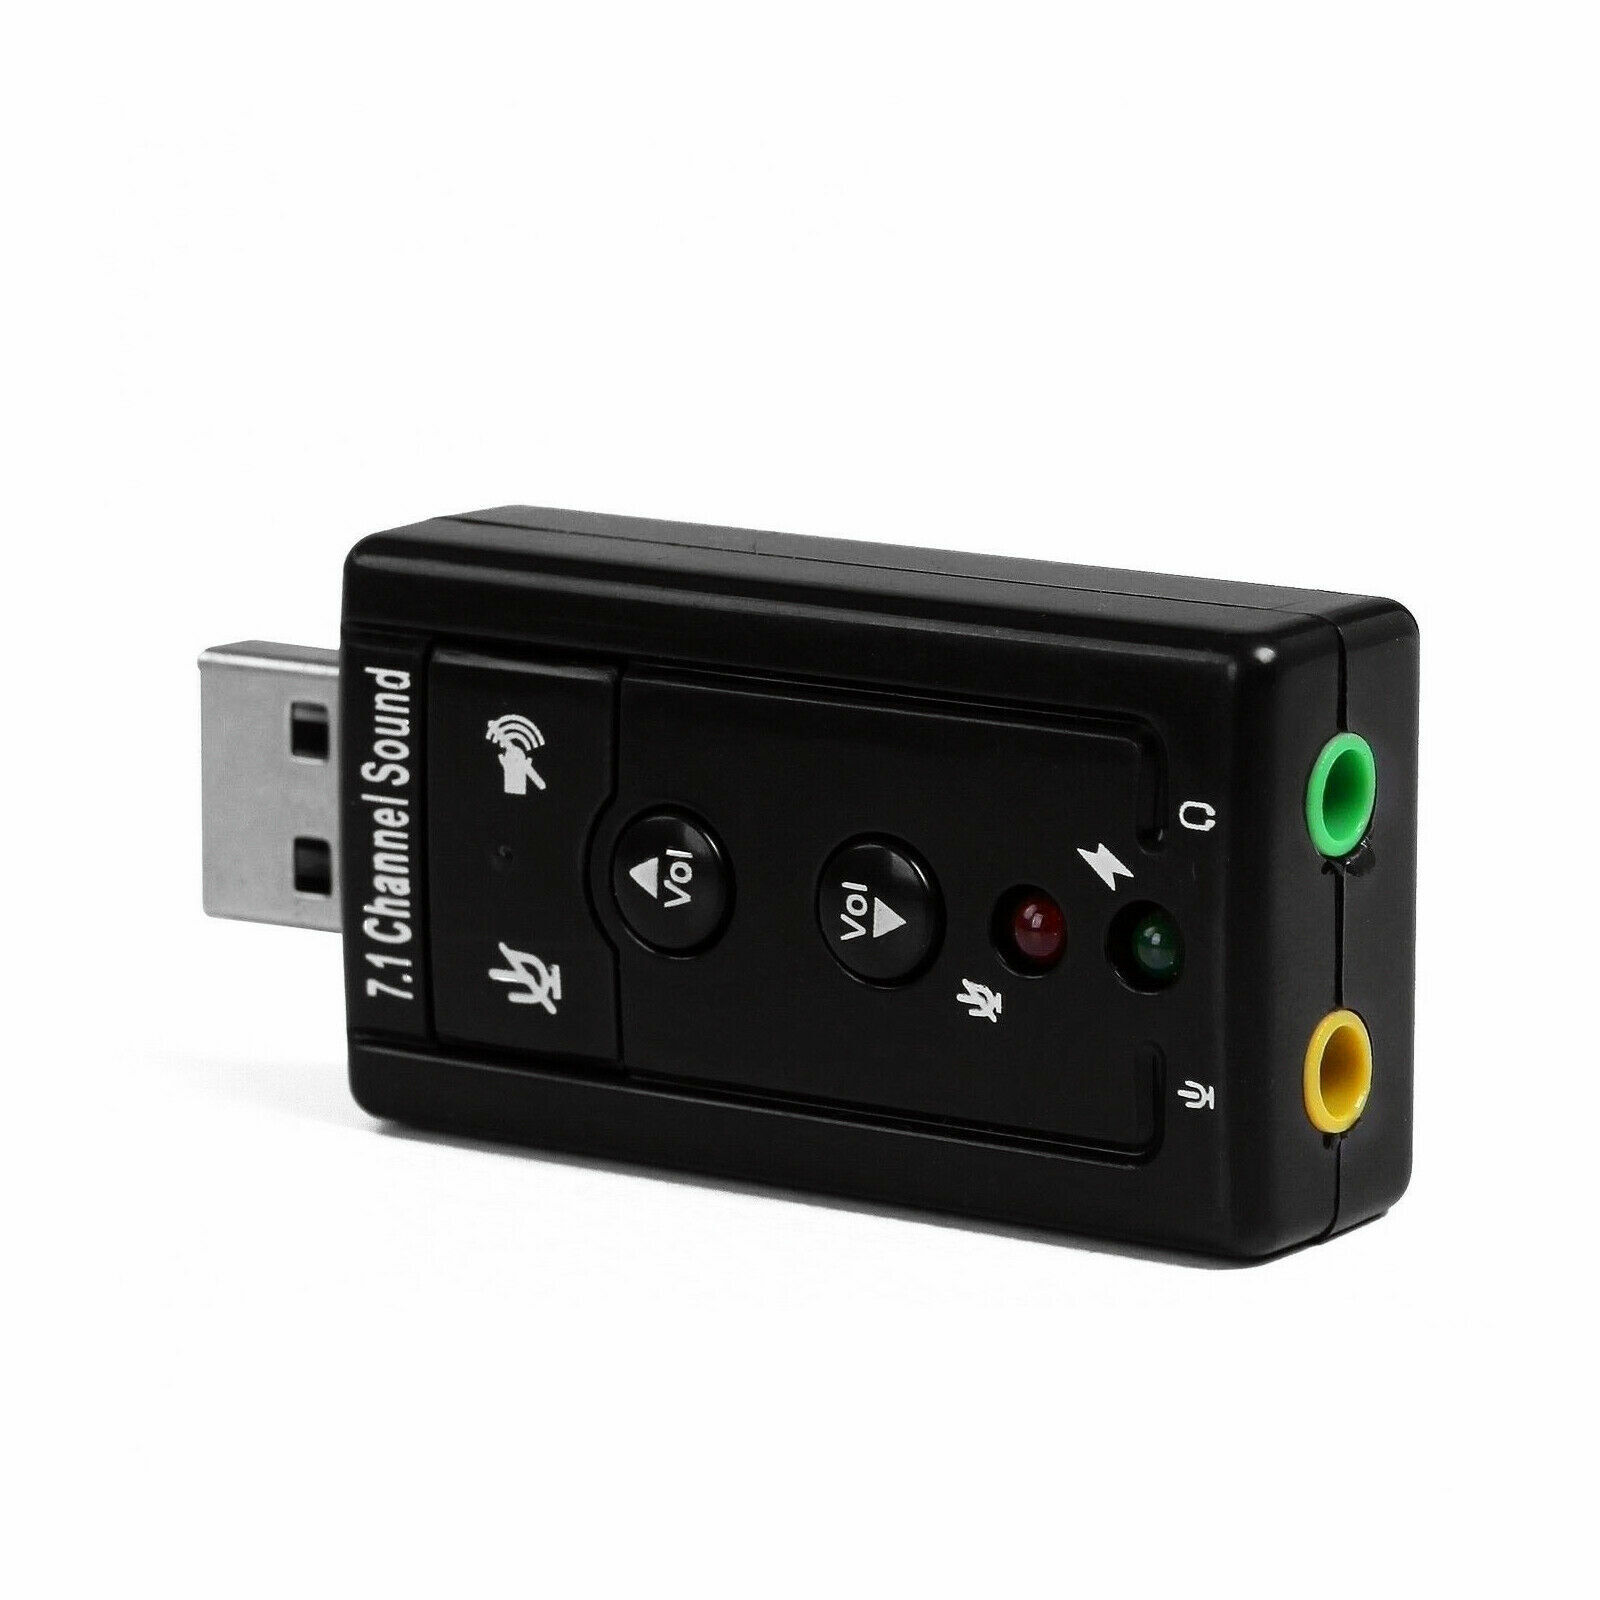 USB 2.0 External 7.1 Channel 3D Virtual Sound Card Mic Adapter Laptop PC #15 NEW